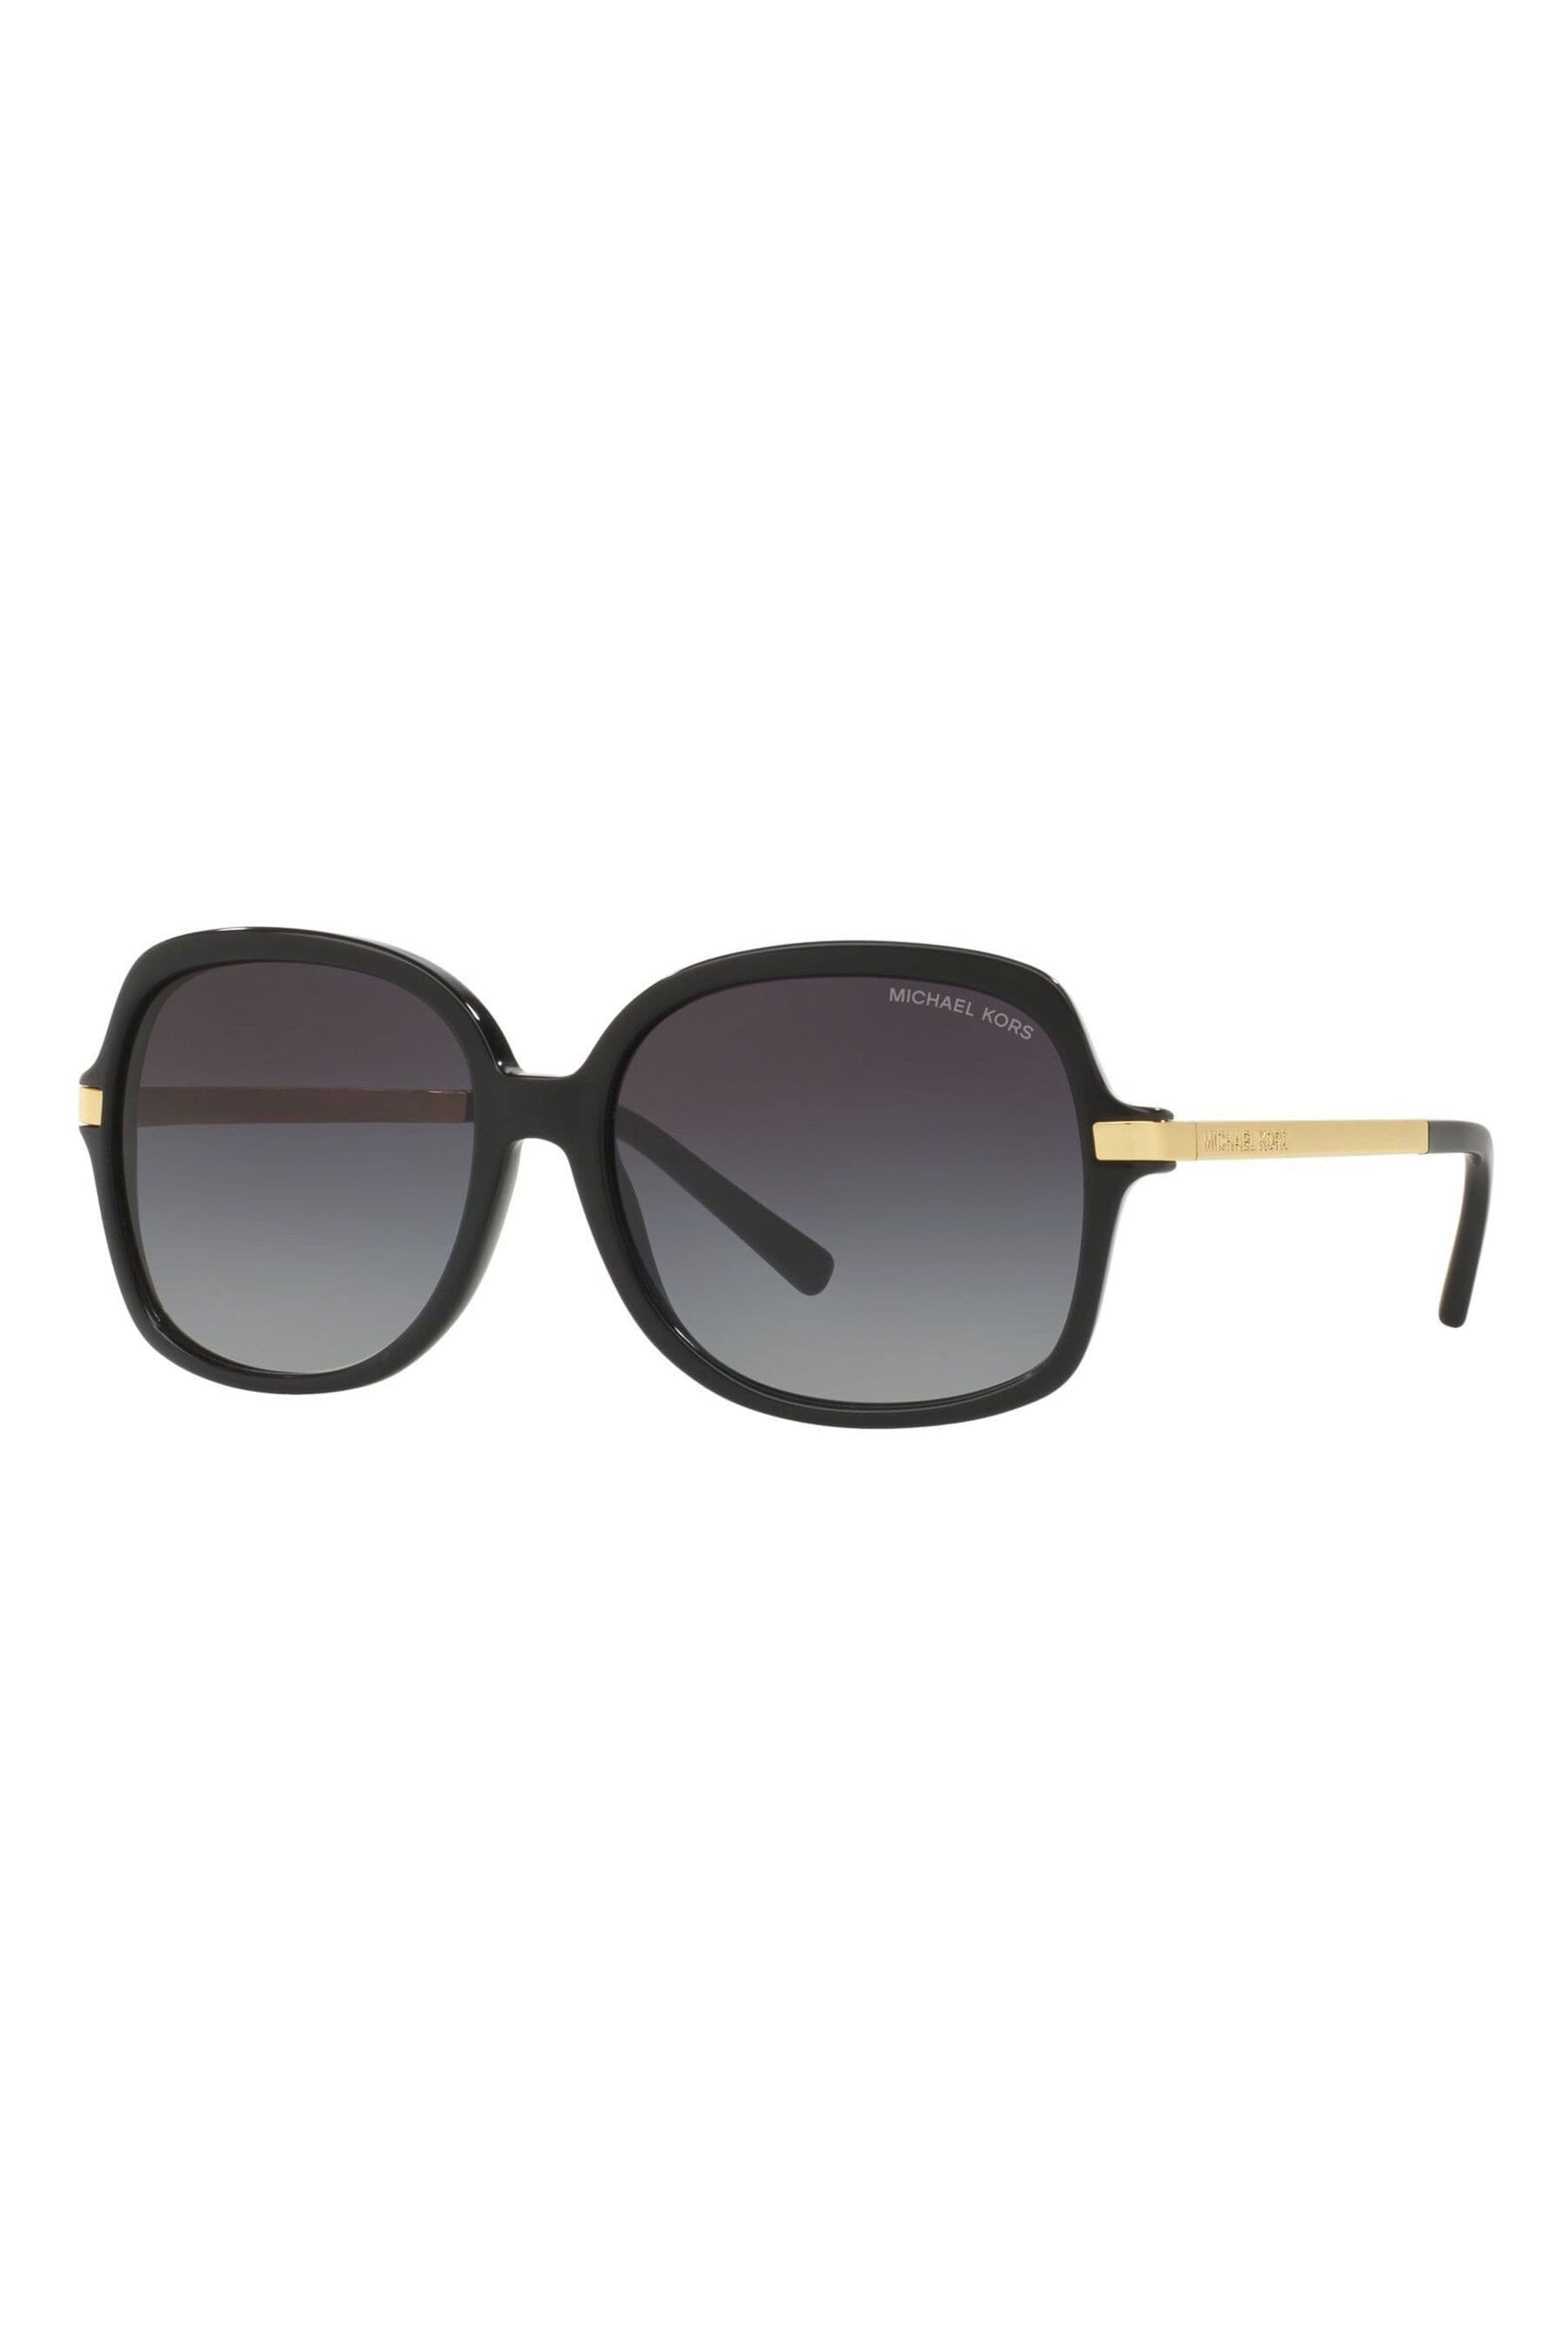 Buy Michael Kors Adrianna II Sunglasses from the Next UK online shop